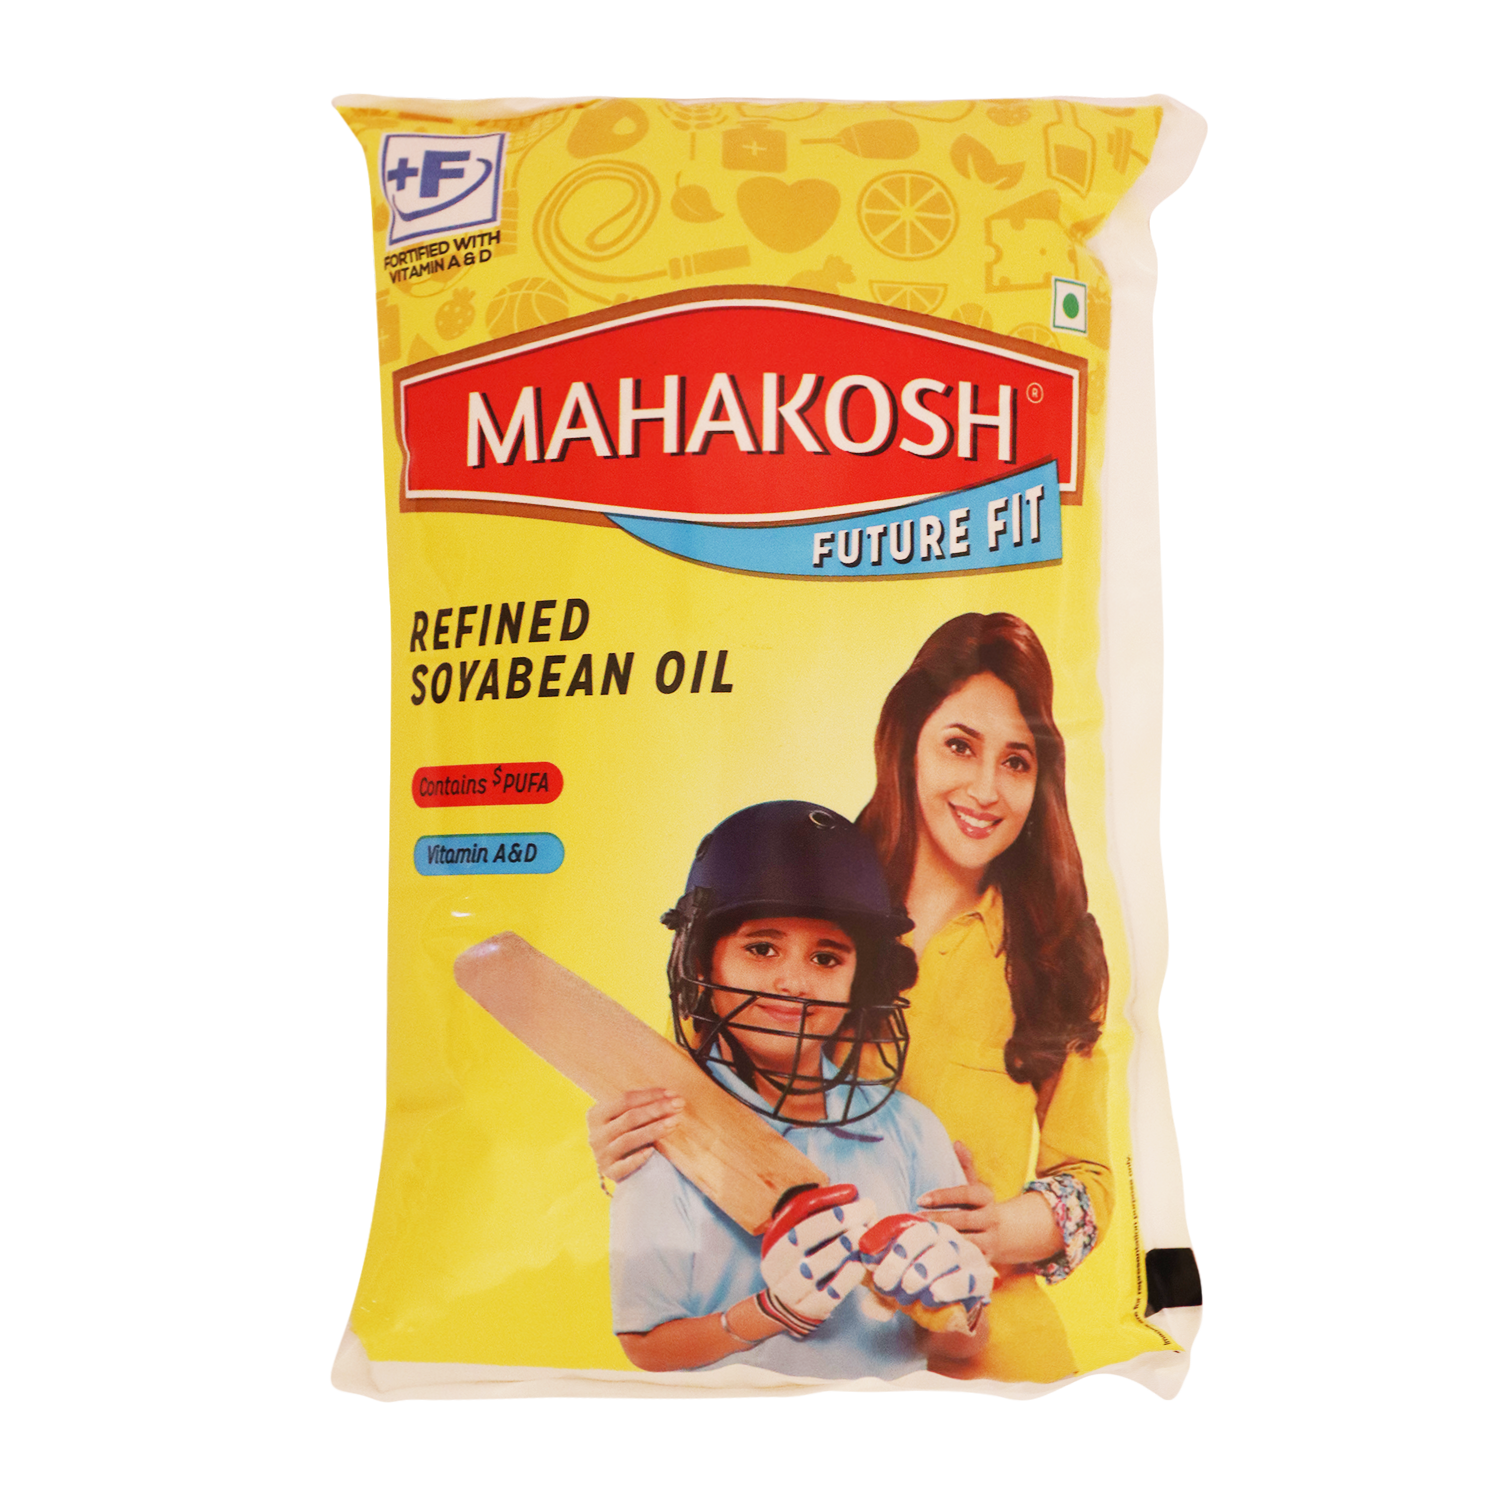 Mahakosh Future Fit Refined Soyabean Oil Soyabean Oil (Pouch) 1 L